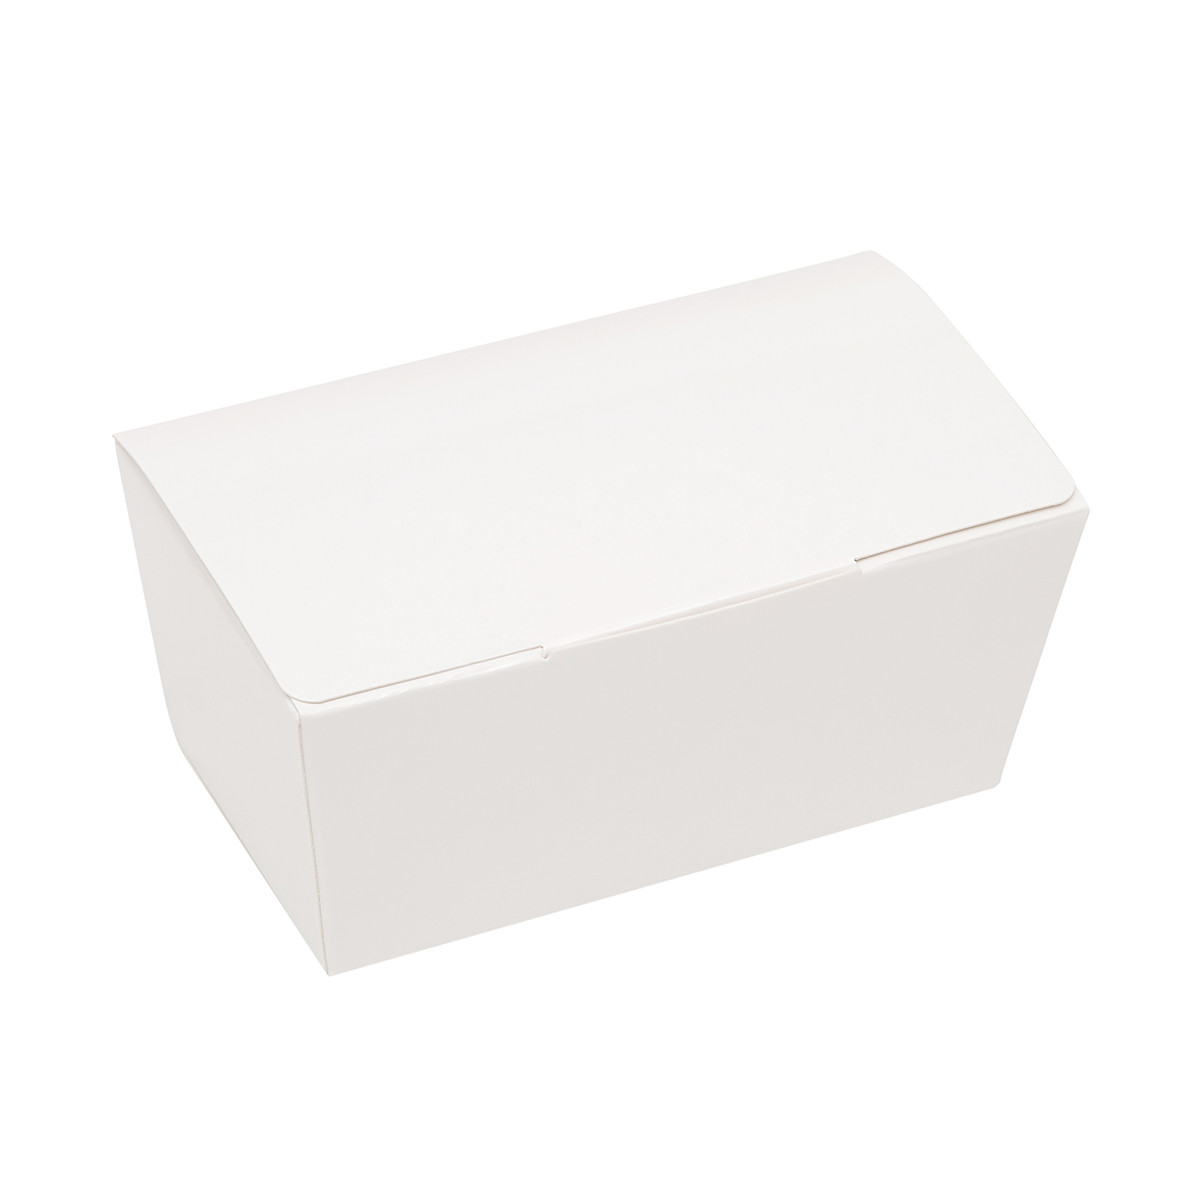 Bonbon box White Glossy -250g- 25 pieces